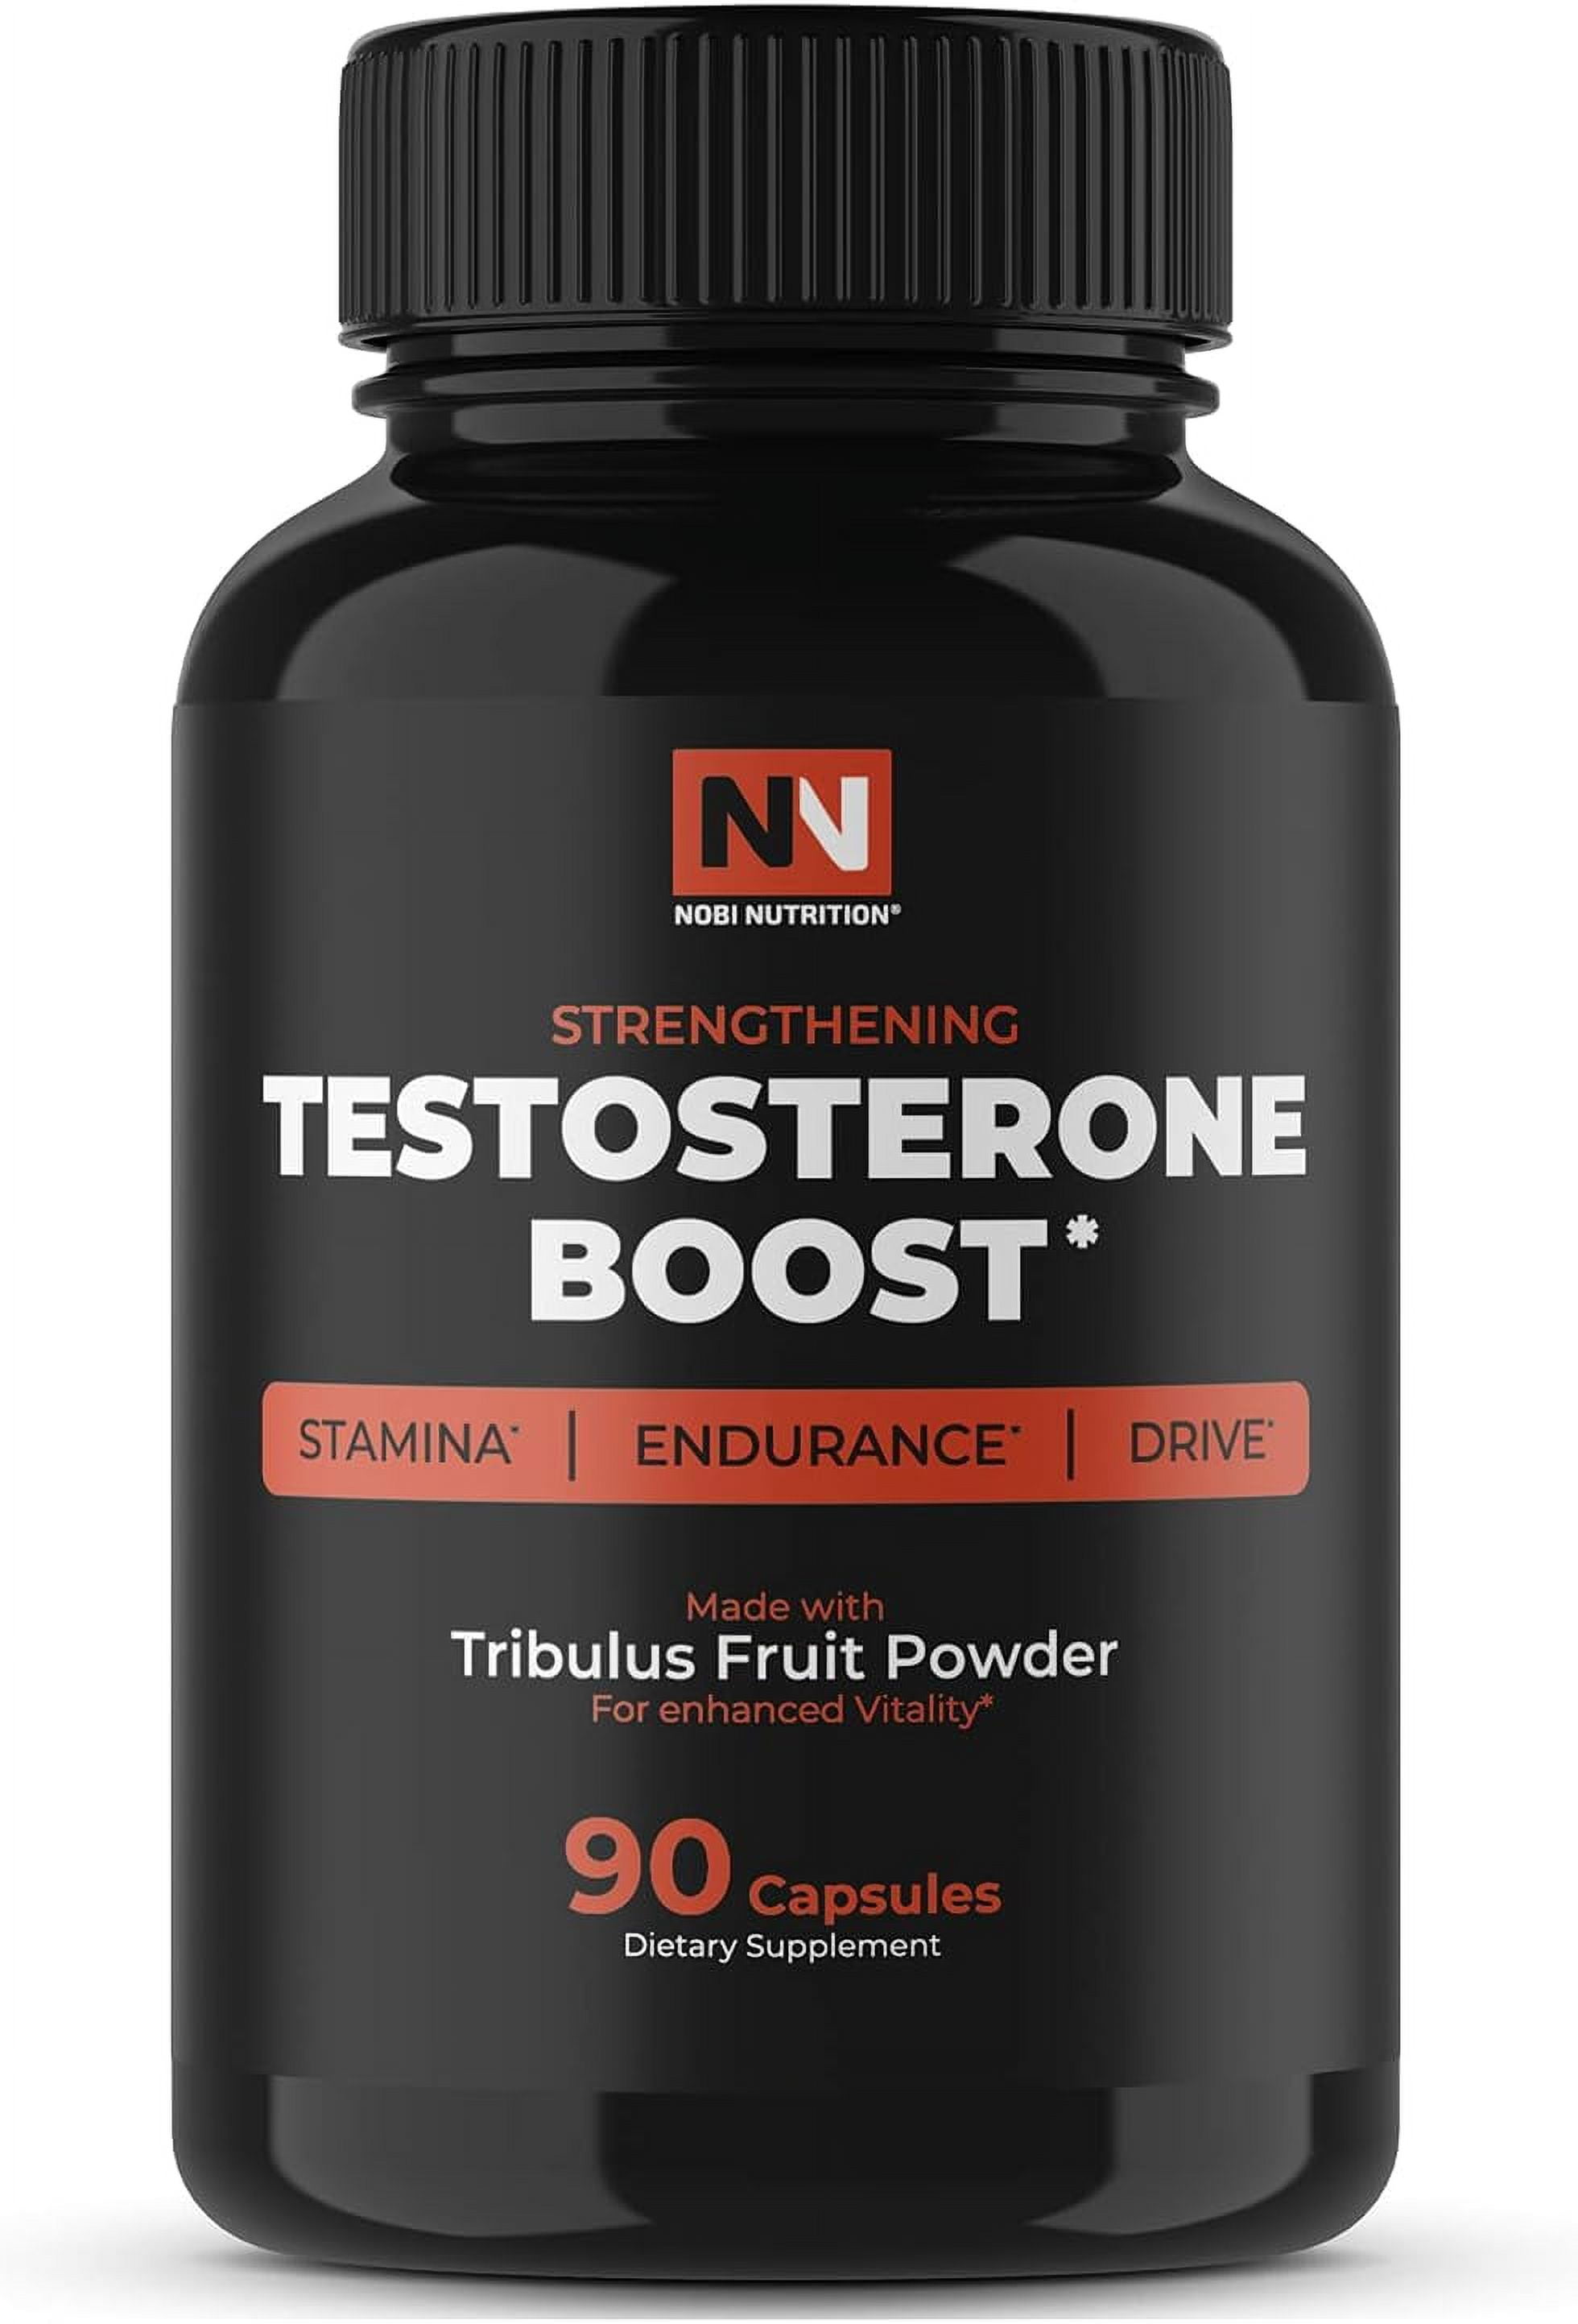 Nobi Nutrition Extra Strength Testosterone Booster for Men